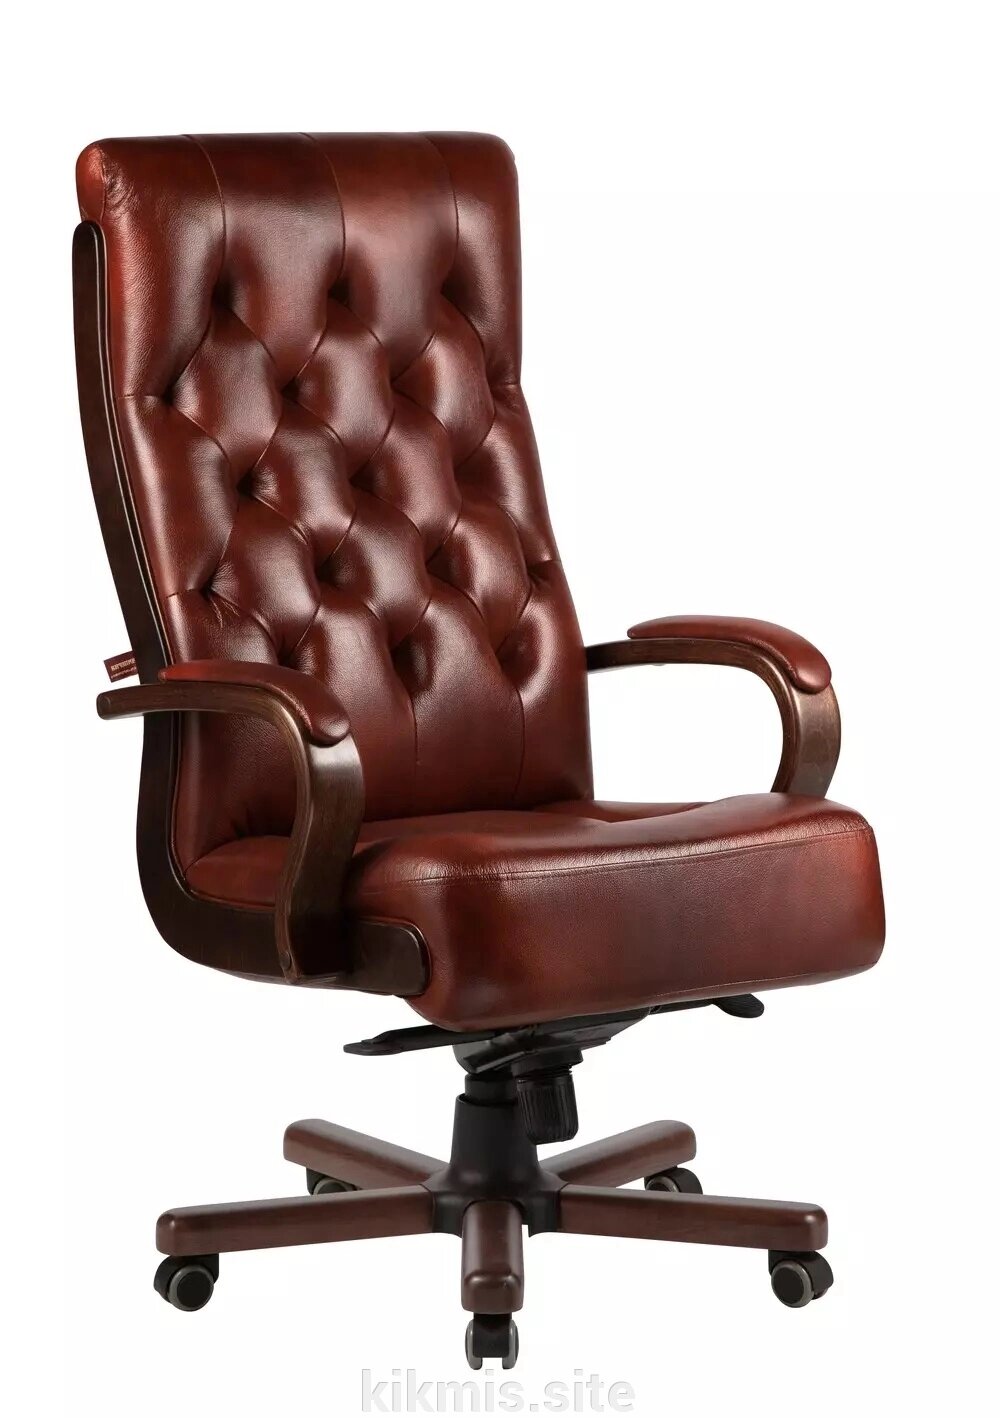 Кресло руководителя Alberto steel нат кожа коричневый\дерево МБ кантри ИМ от компании Интернет - магазин Kikmis - фото 1